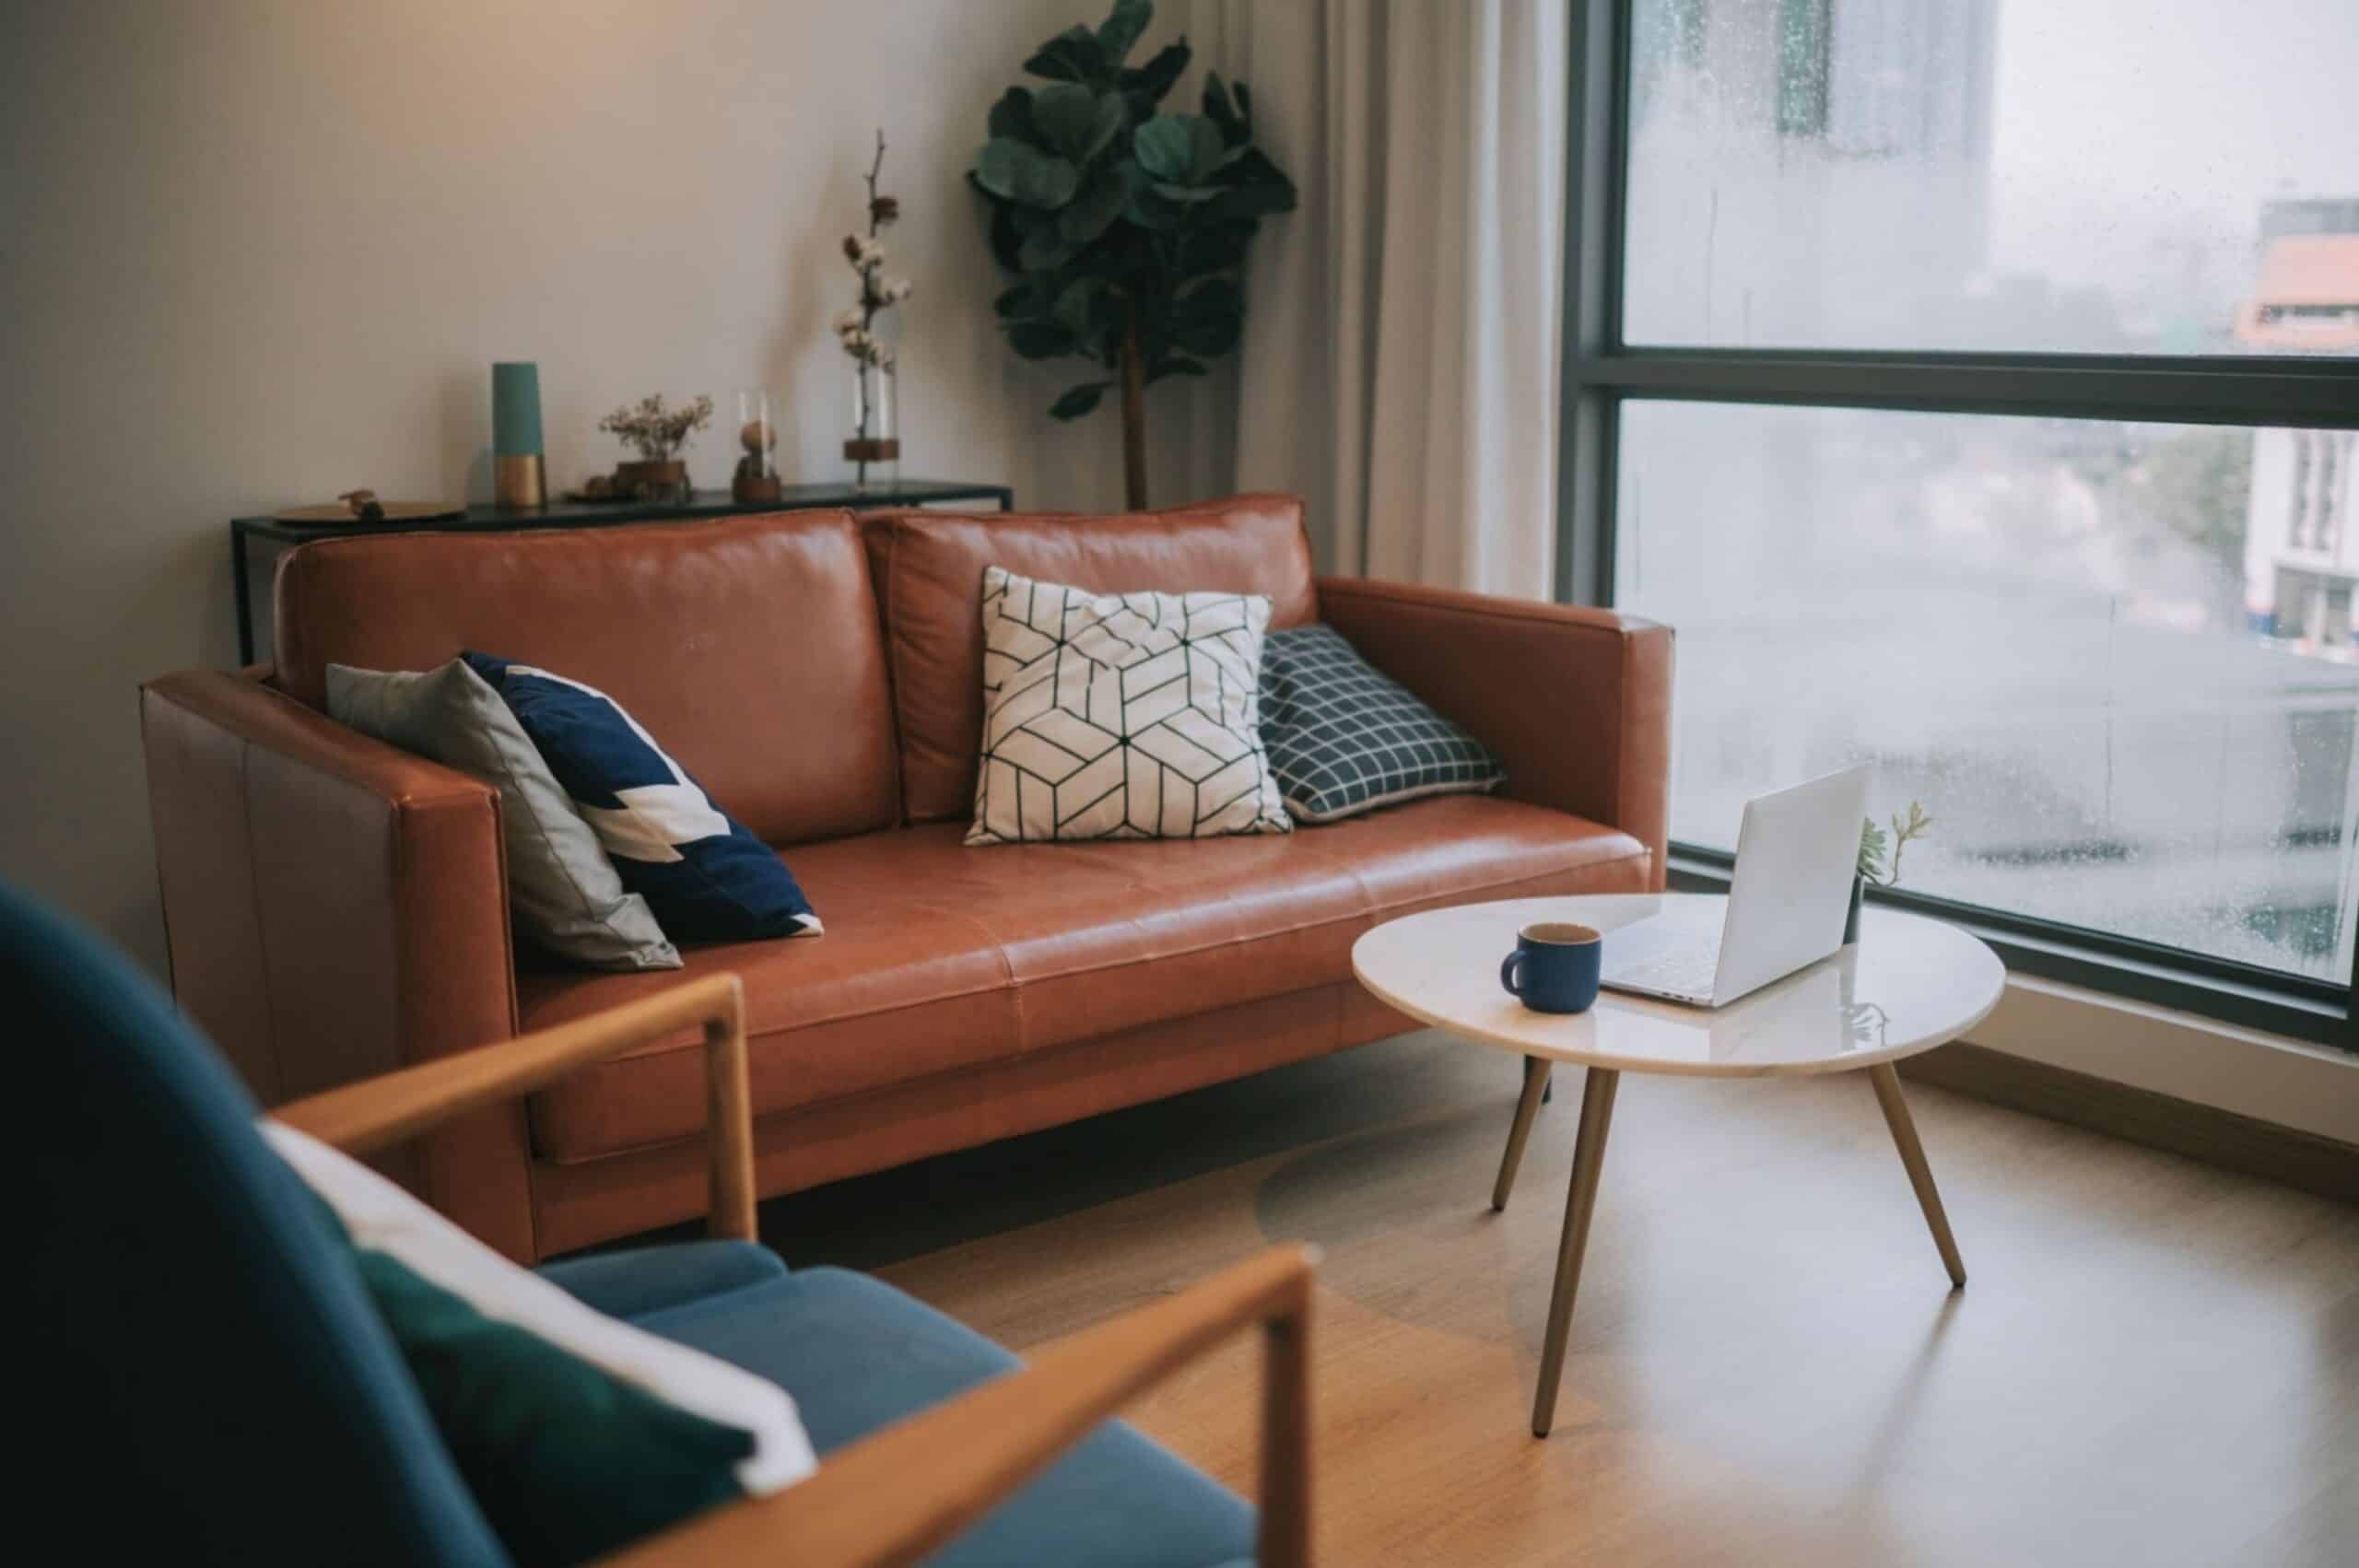 living room with coffee table, cushion on sofa